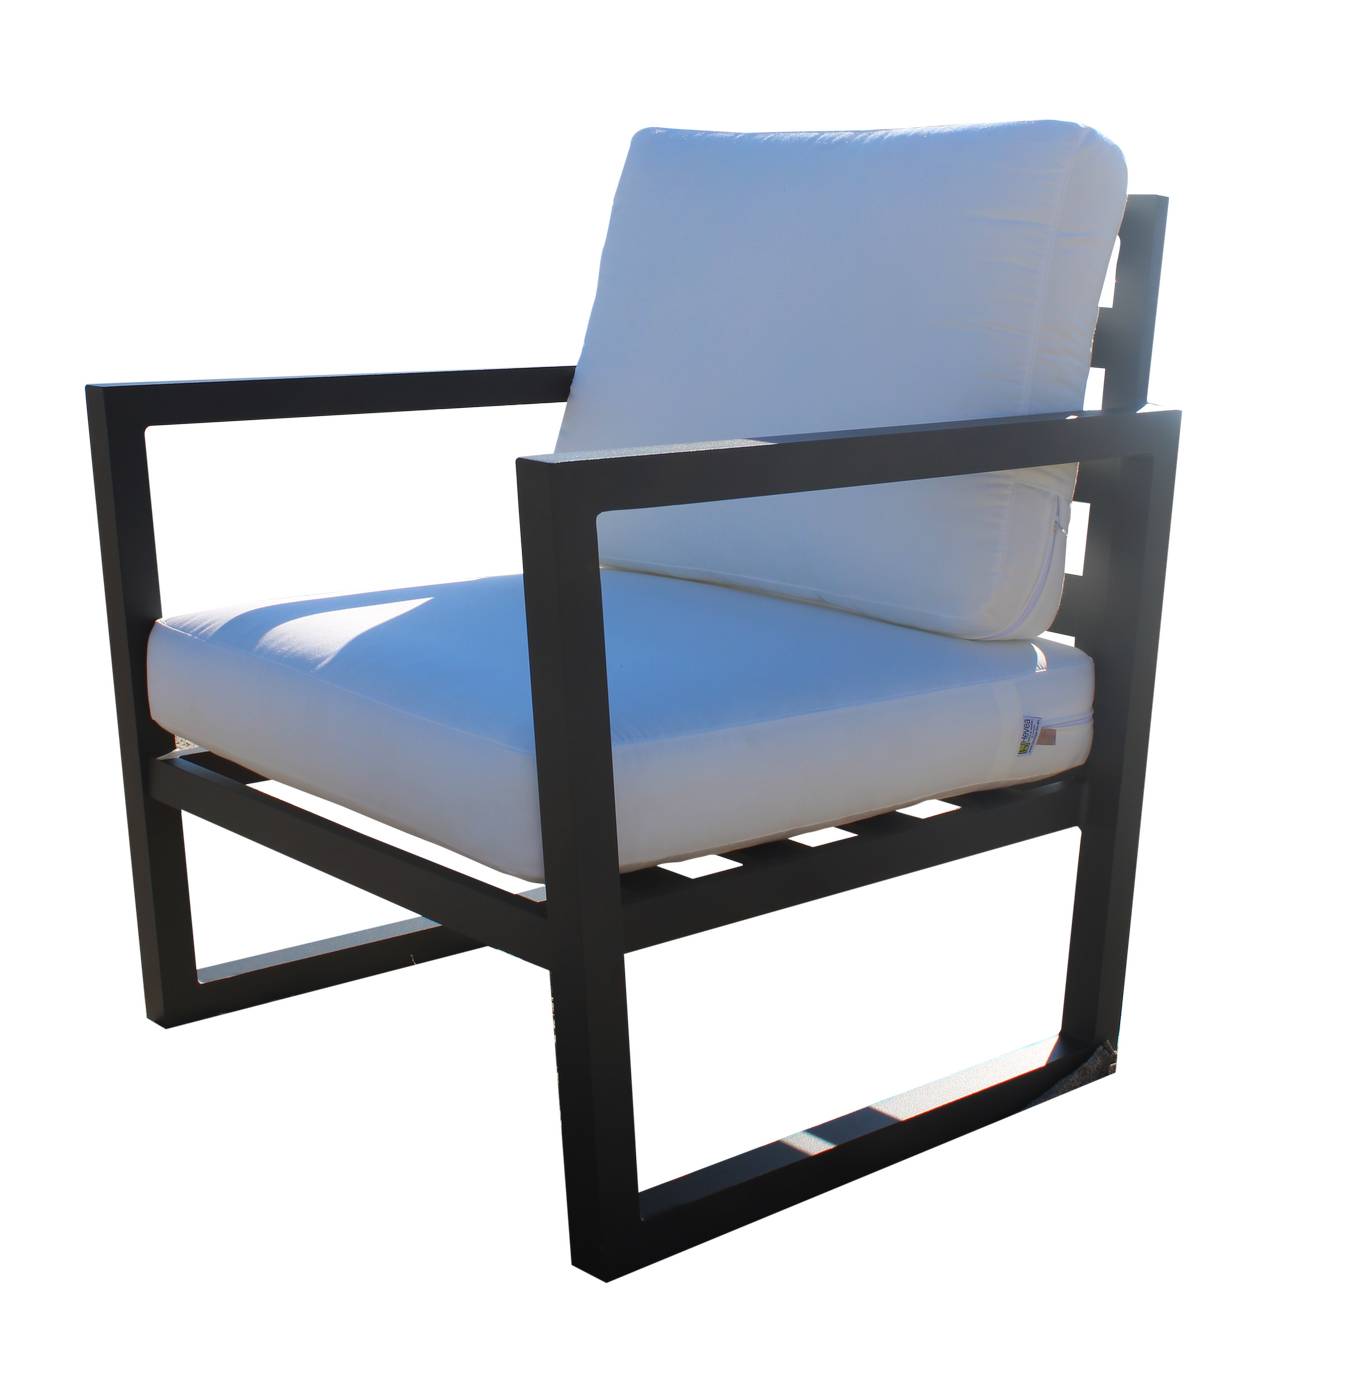 Set Aluminio Alpine-8 - Conjunto de aluminio para exterior: sofá 3 plazas + 2 sillones + mesa de centro. Disponible en color blanco, antracita, champagne, plata o marrón.